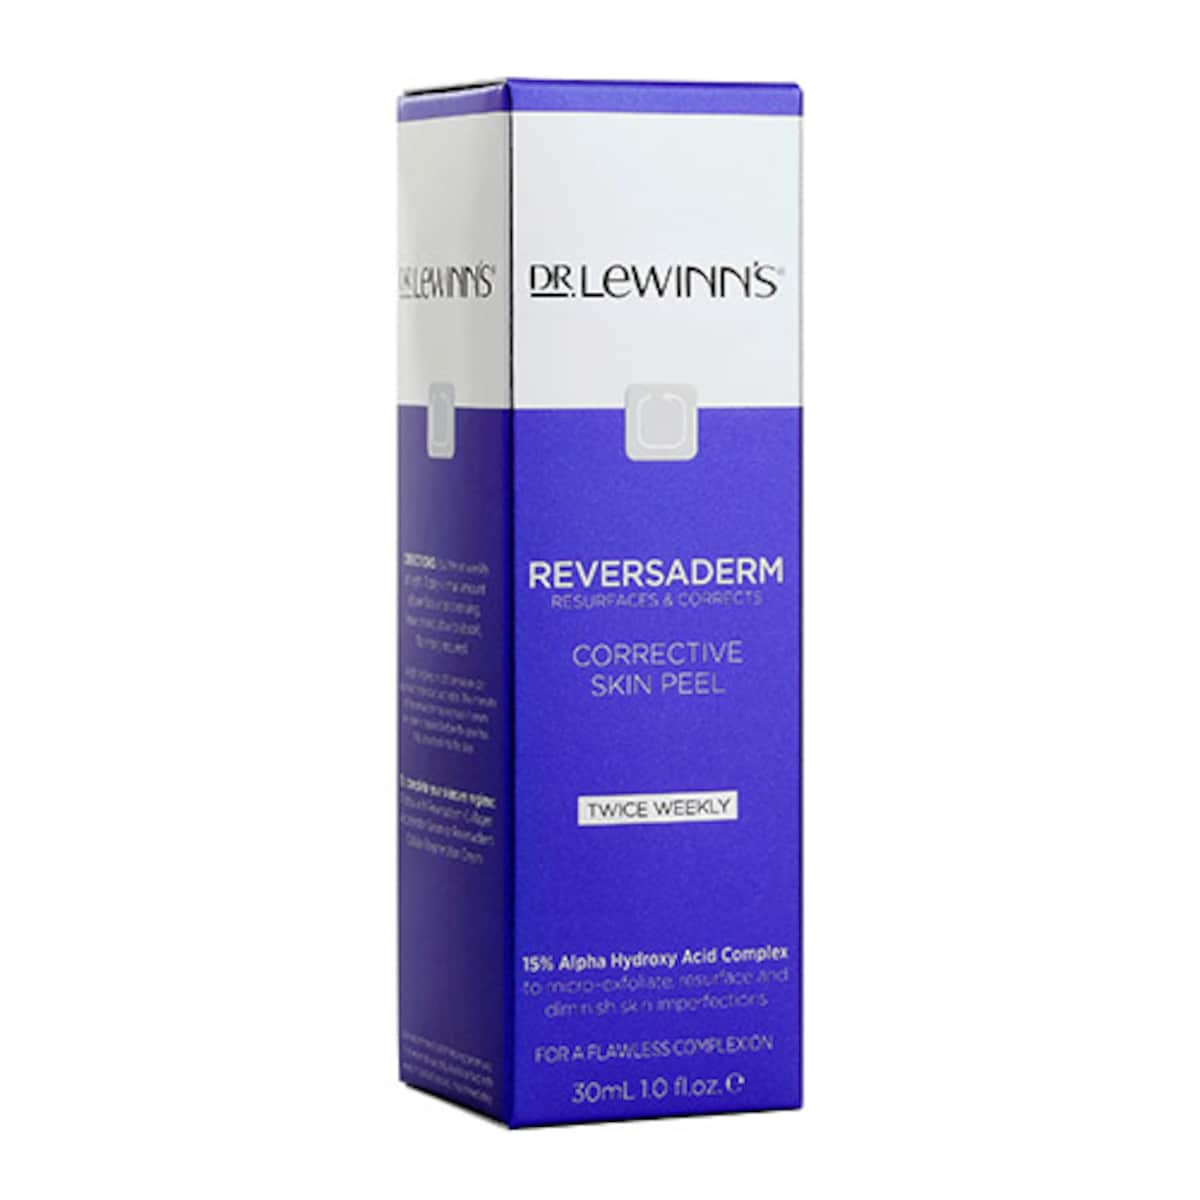 Dr Lewinns Reversaderm Corrective Skin Peel 30ml